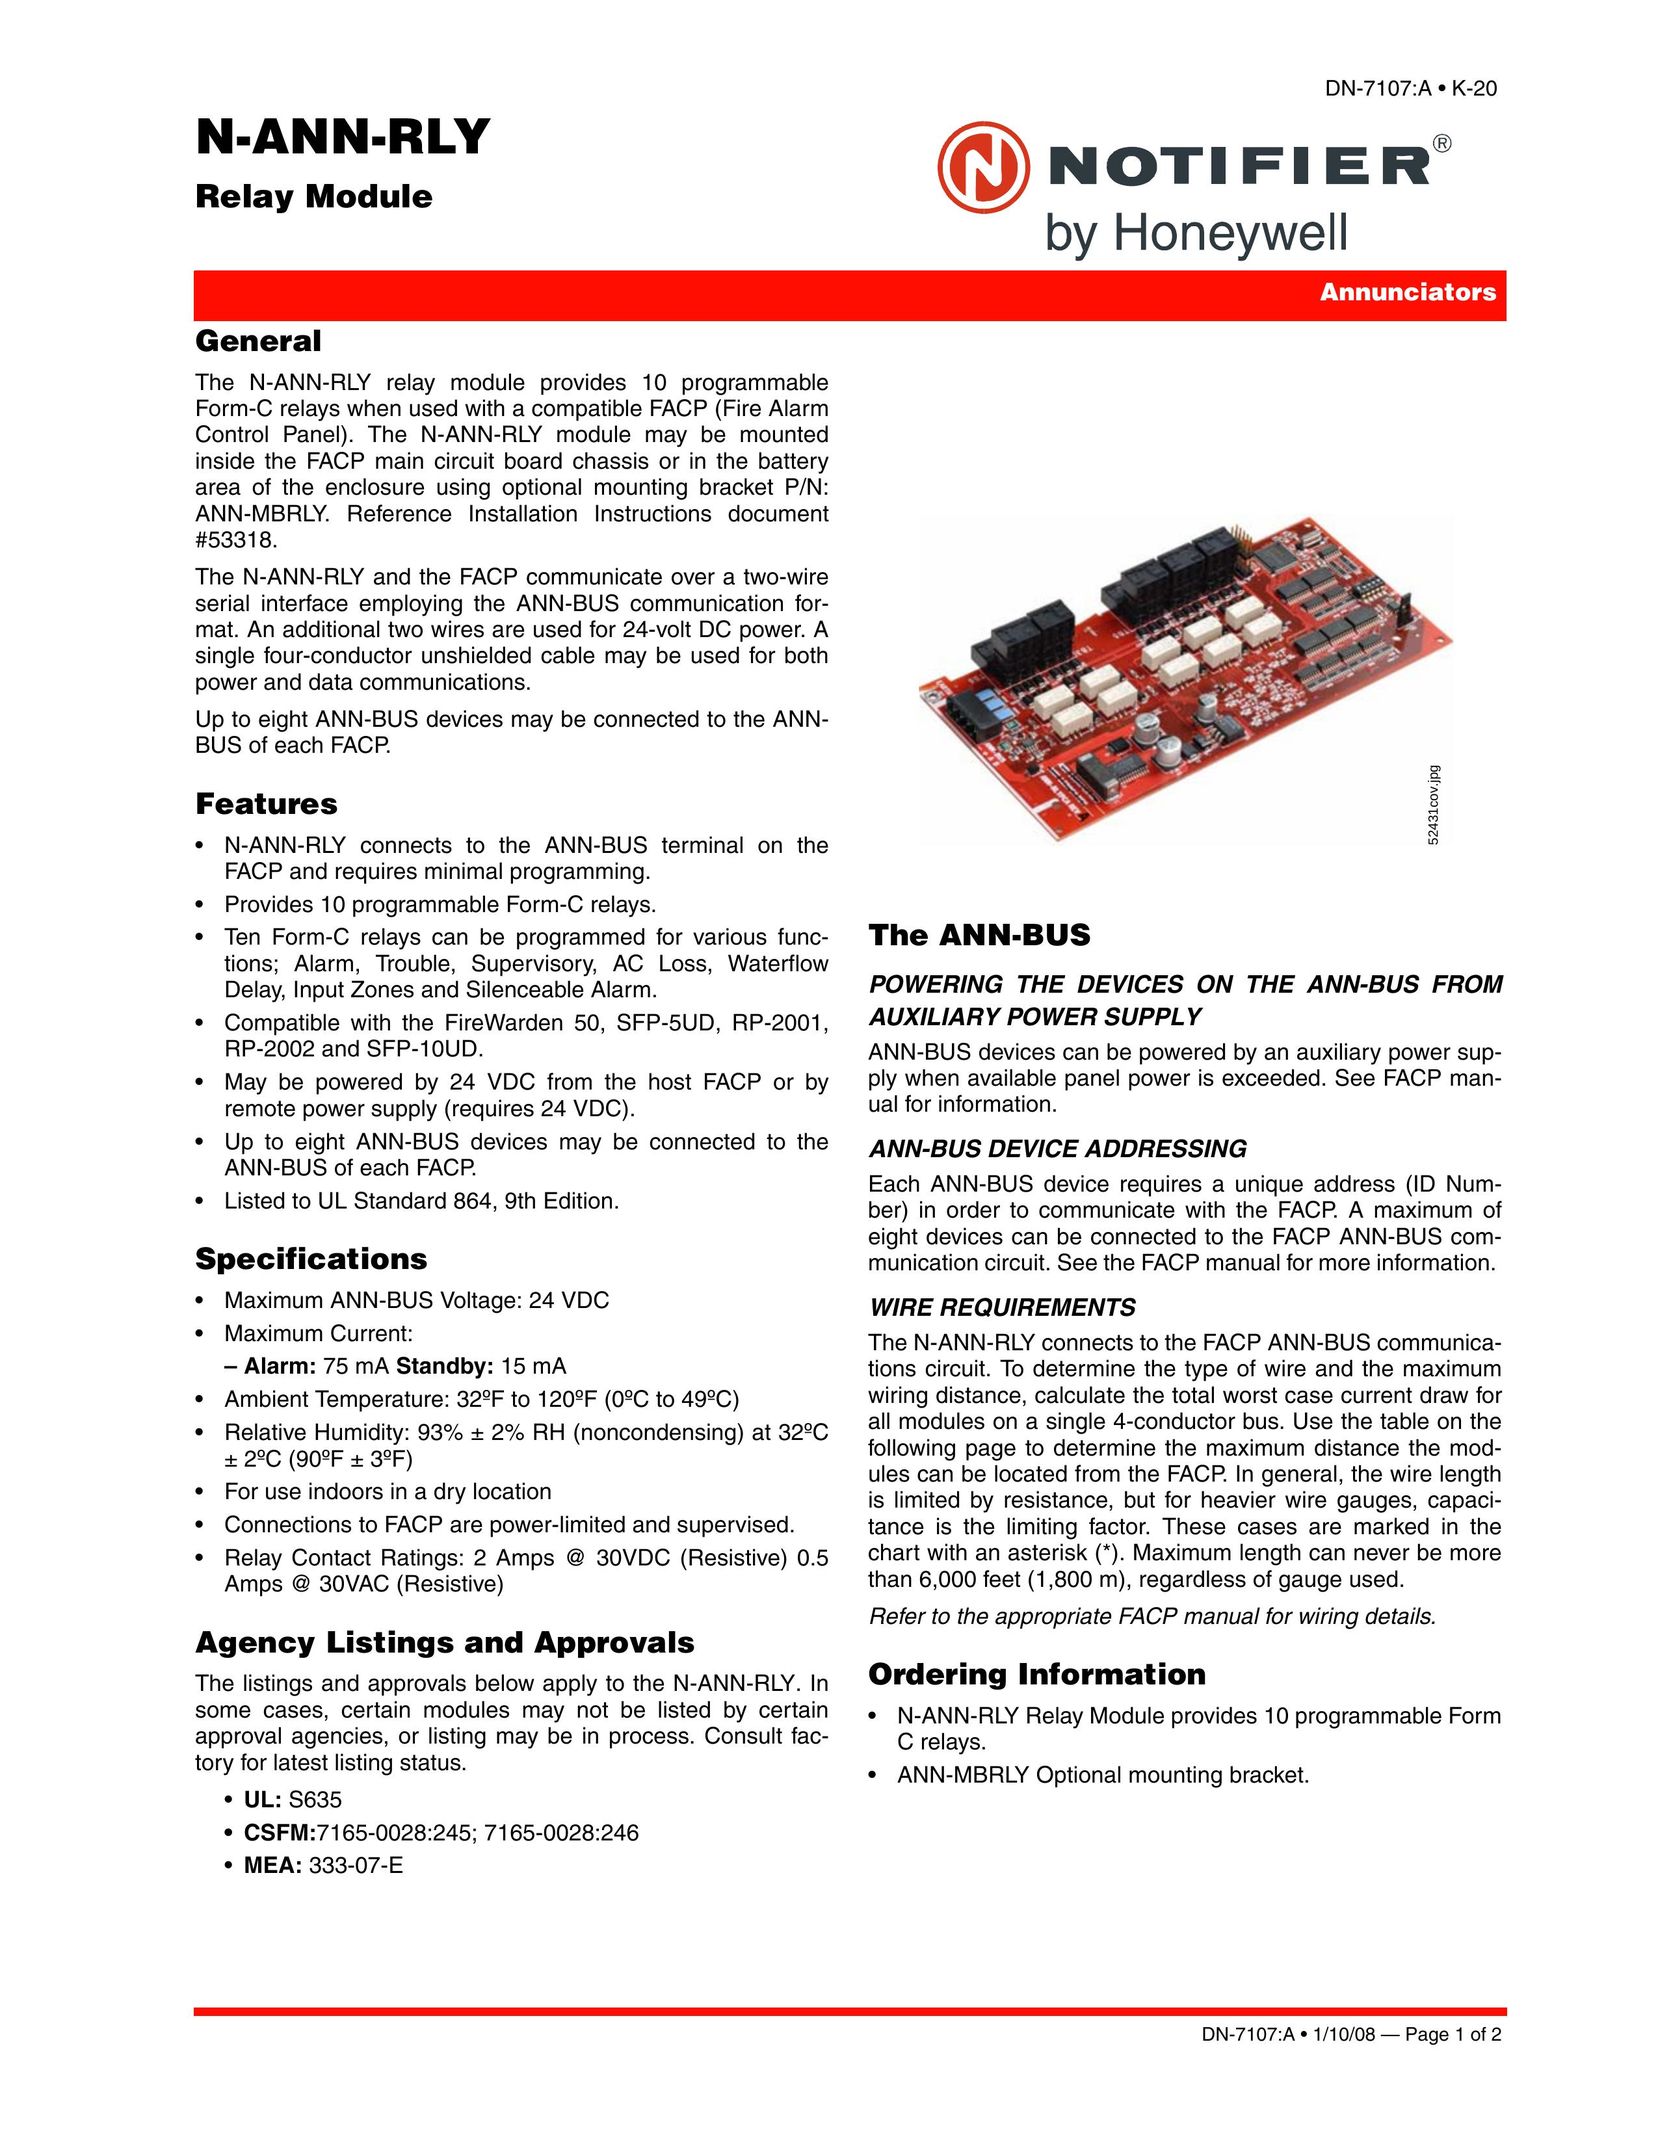 Honeywell N-ANN-RLY Network Card User Manual